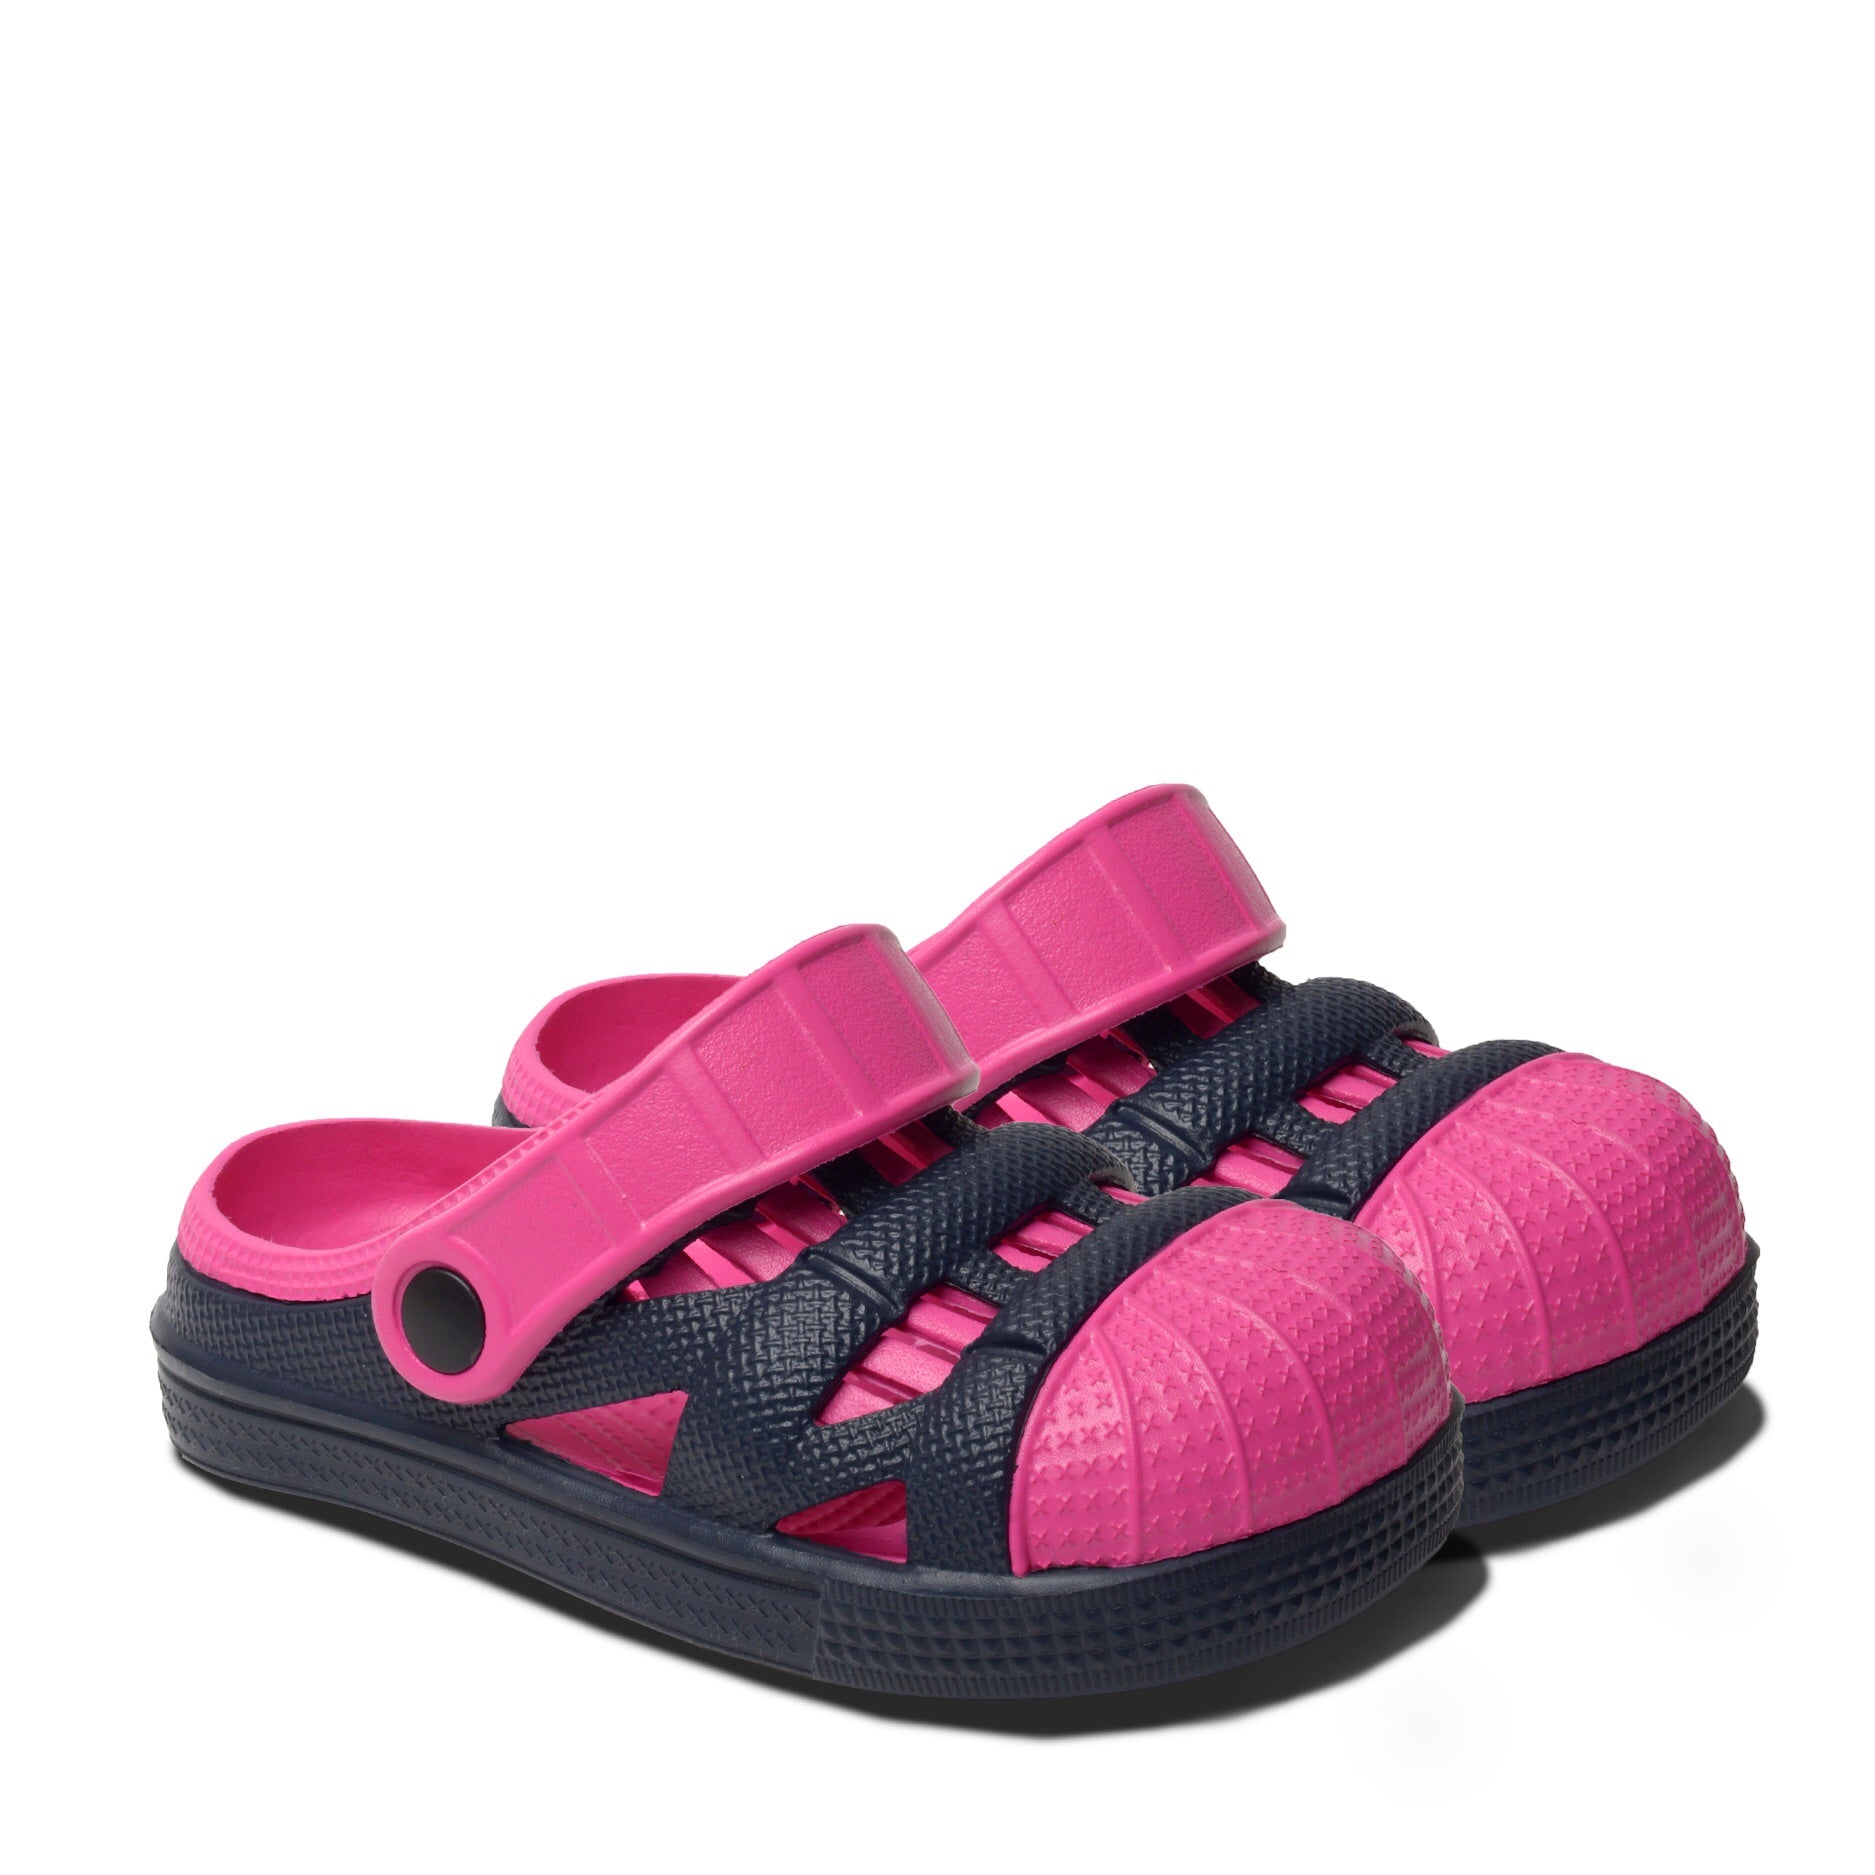 Kids Lightweight Sandals - Pink/Navy (size 27 left only)